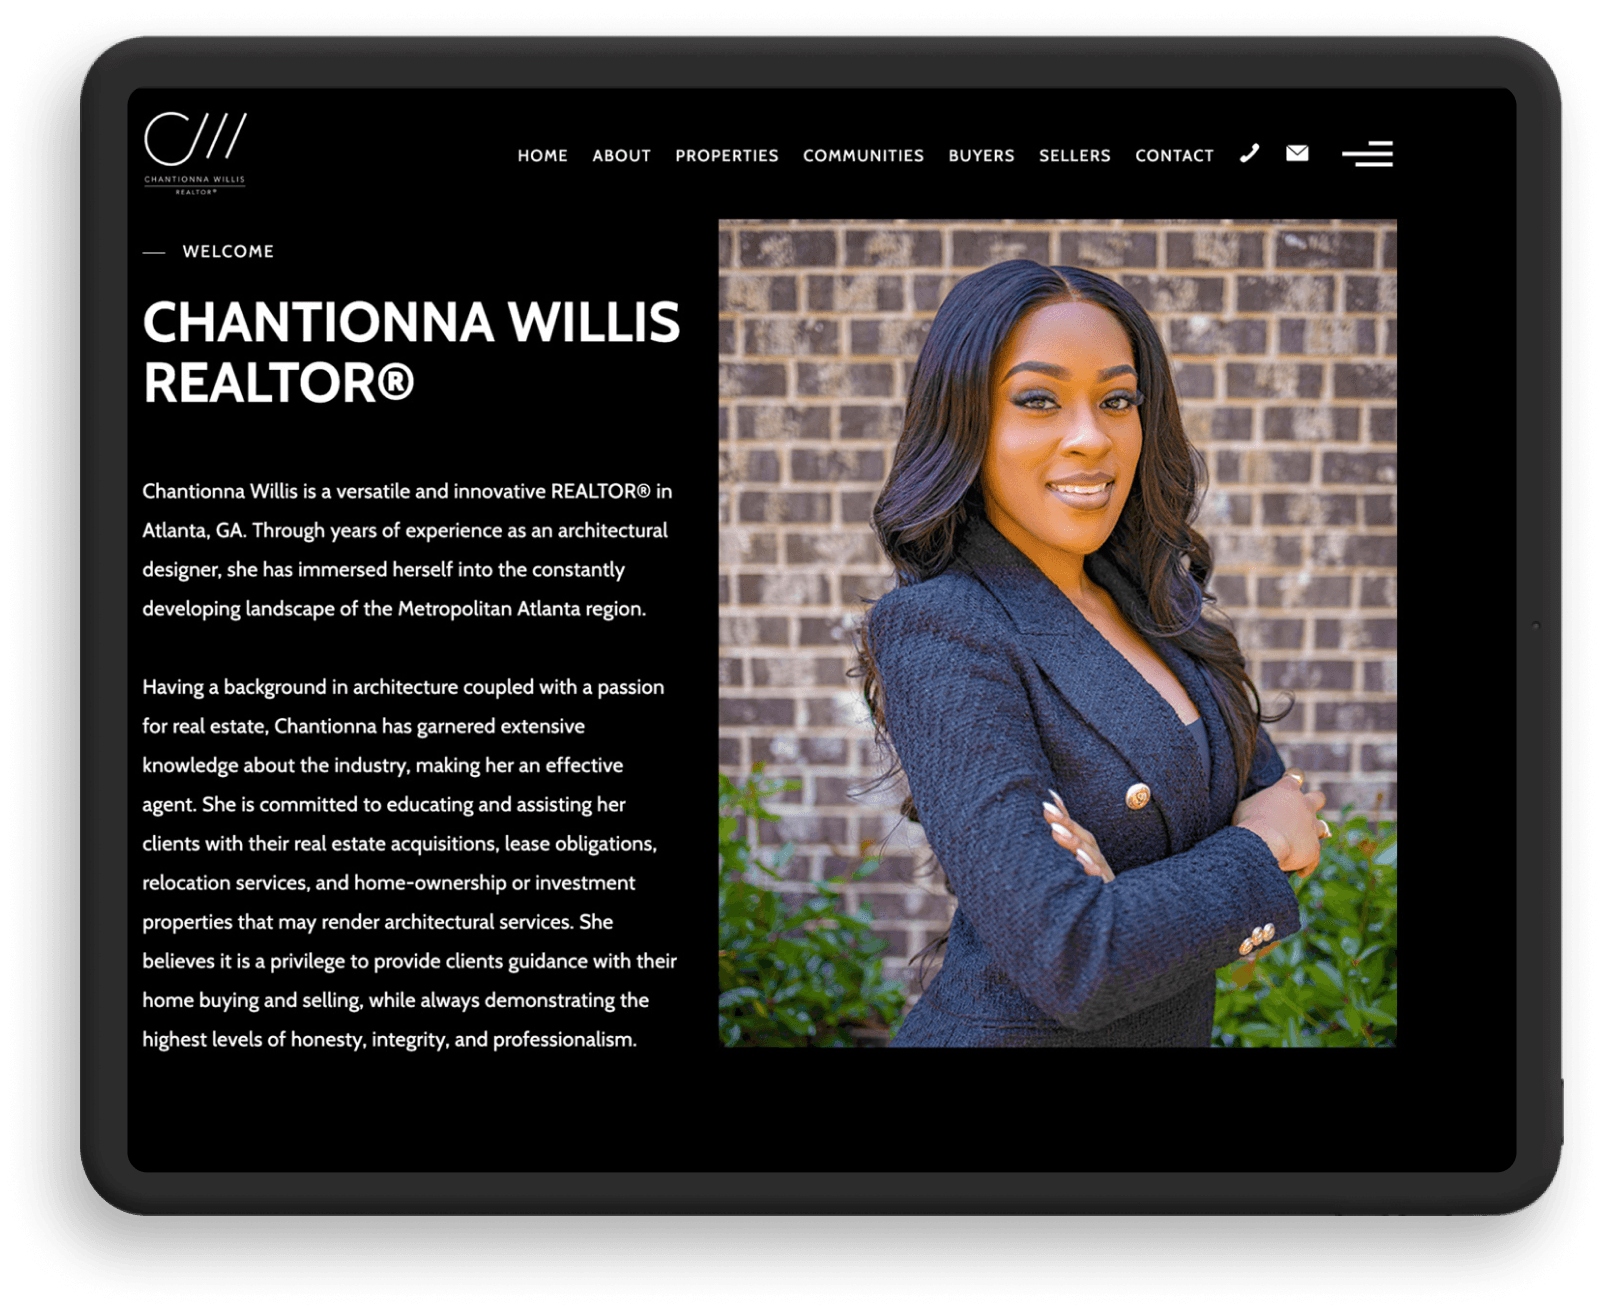 Chantionna Willis screenshot on tablet